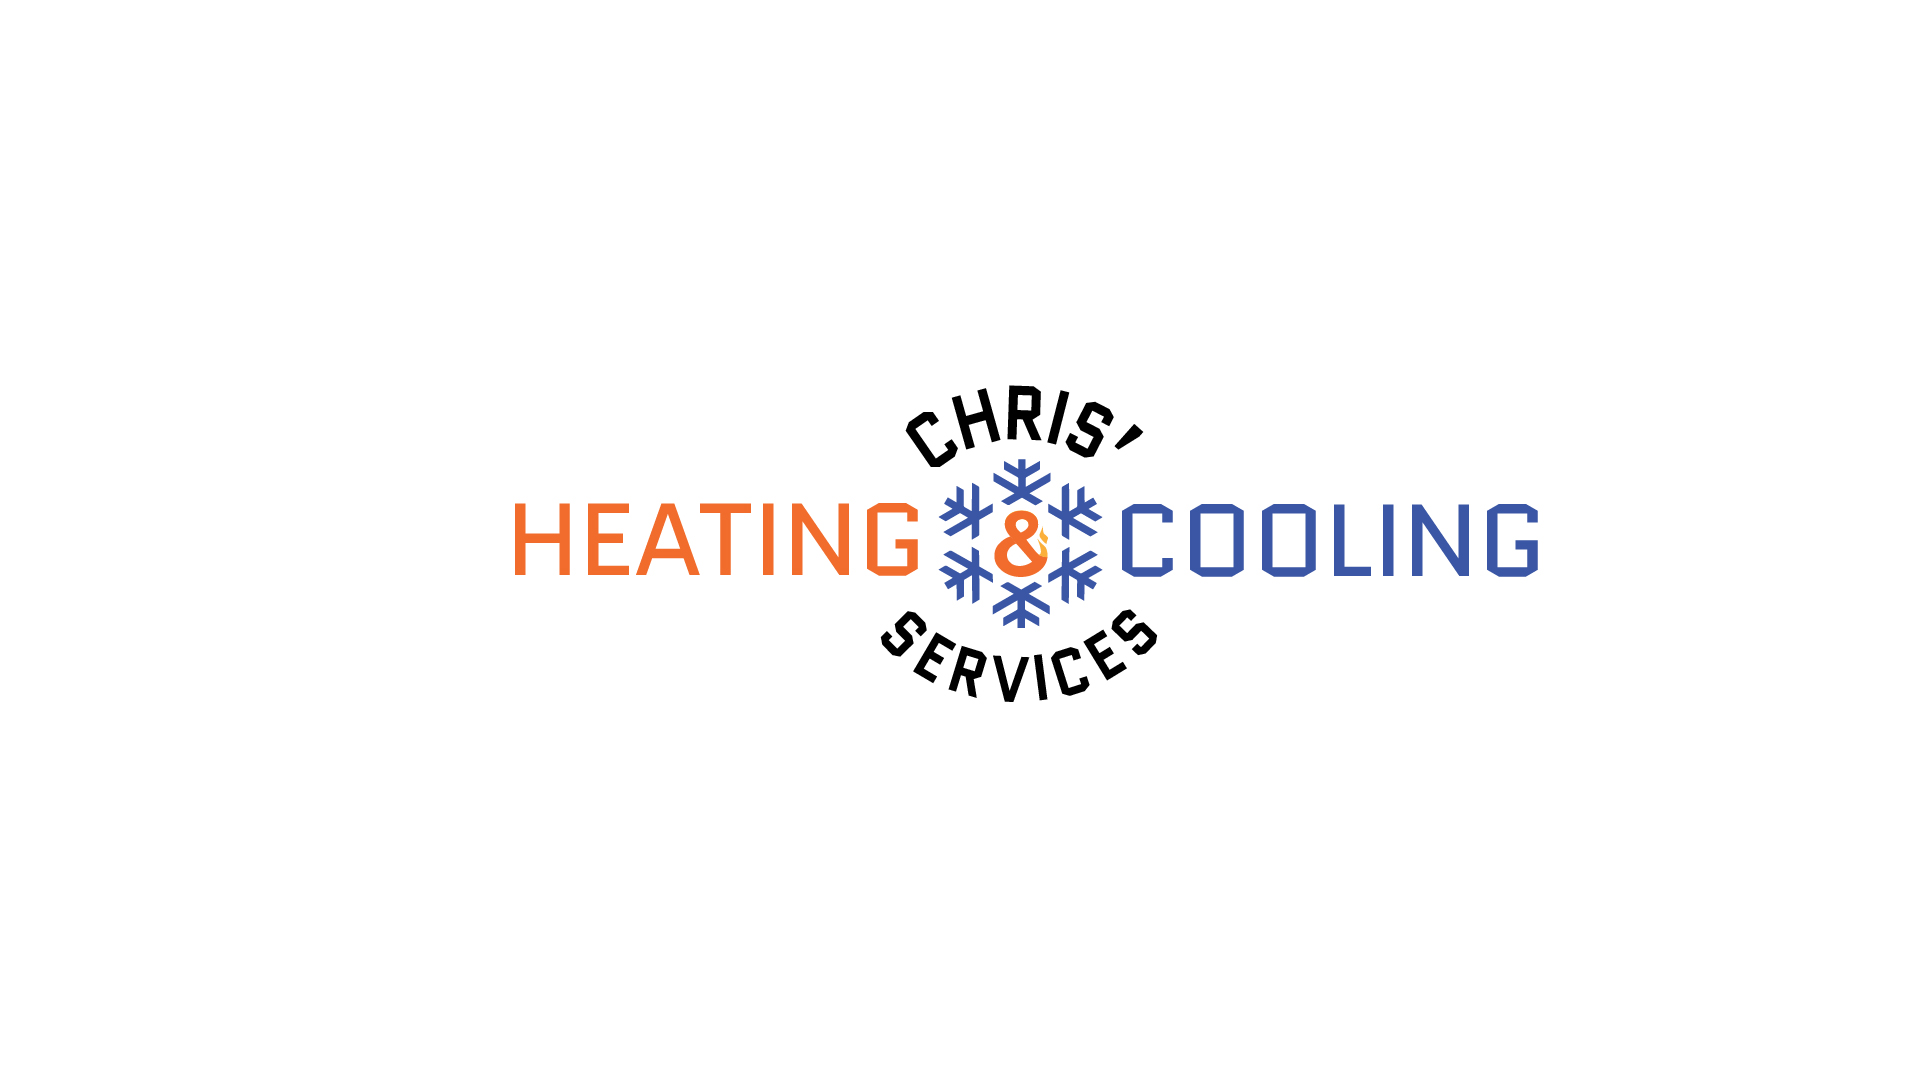 Chris' Heating & Cooling Services, LLC Logo